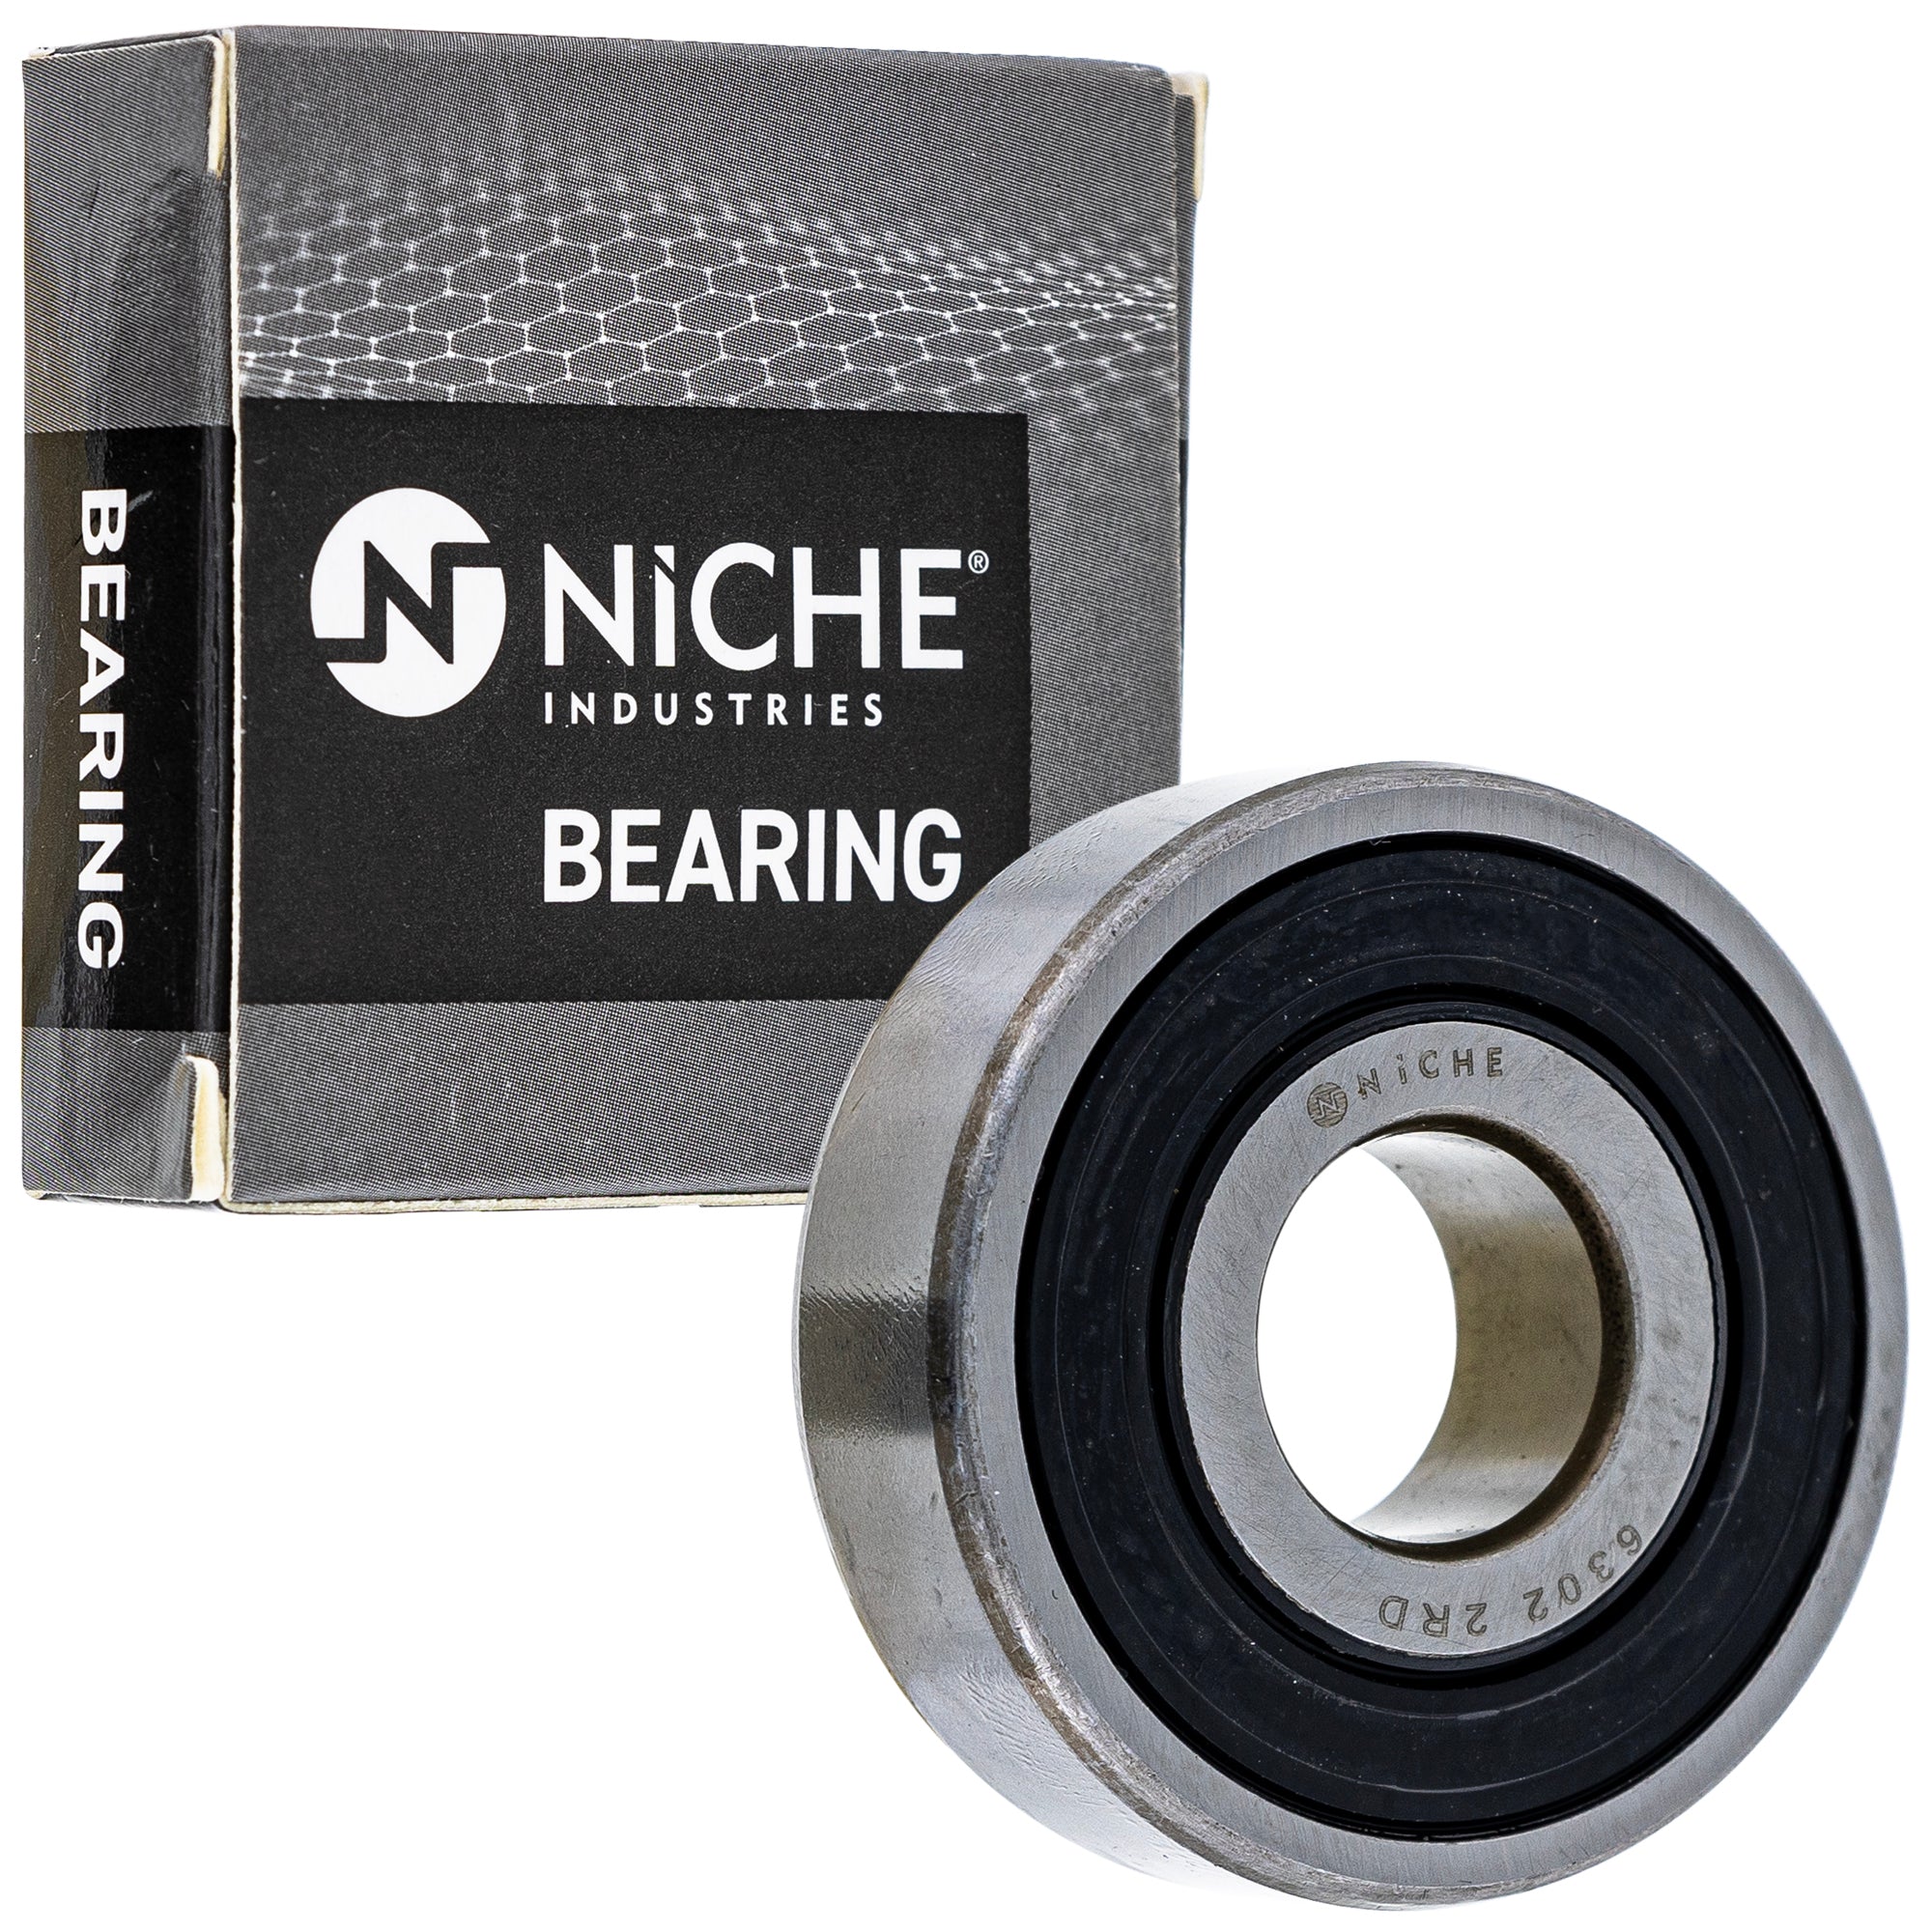 NICHE 519-CBB2324R Bearing 2-Pack for zOTHER XR200R XR200 XR185 XL350